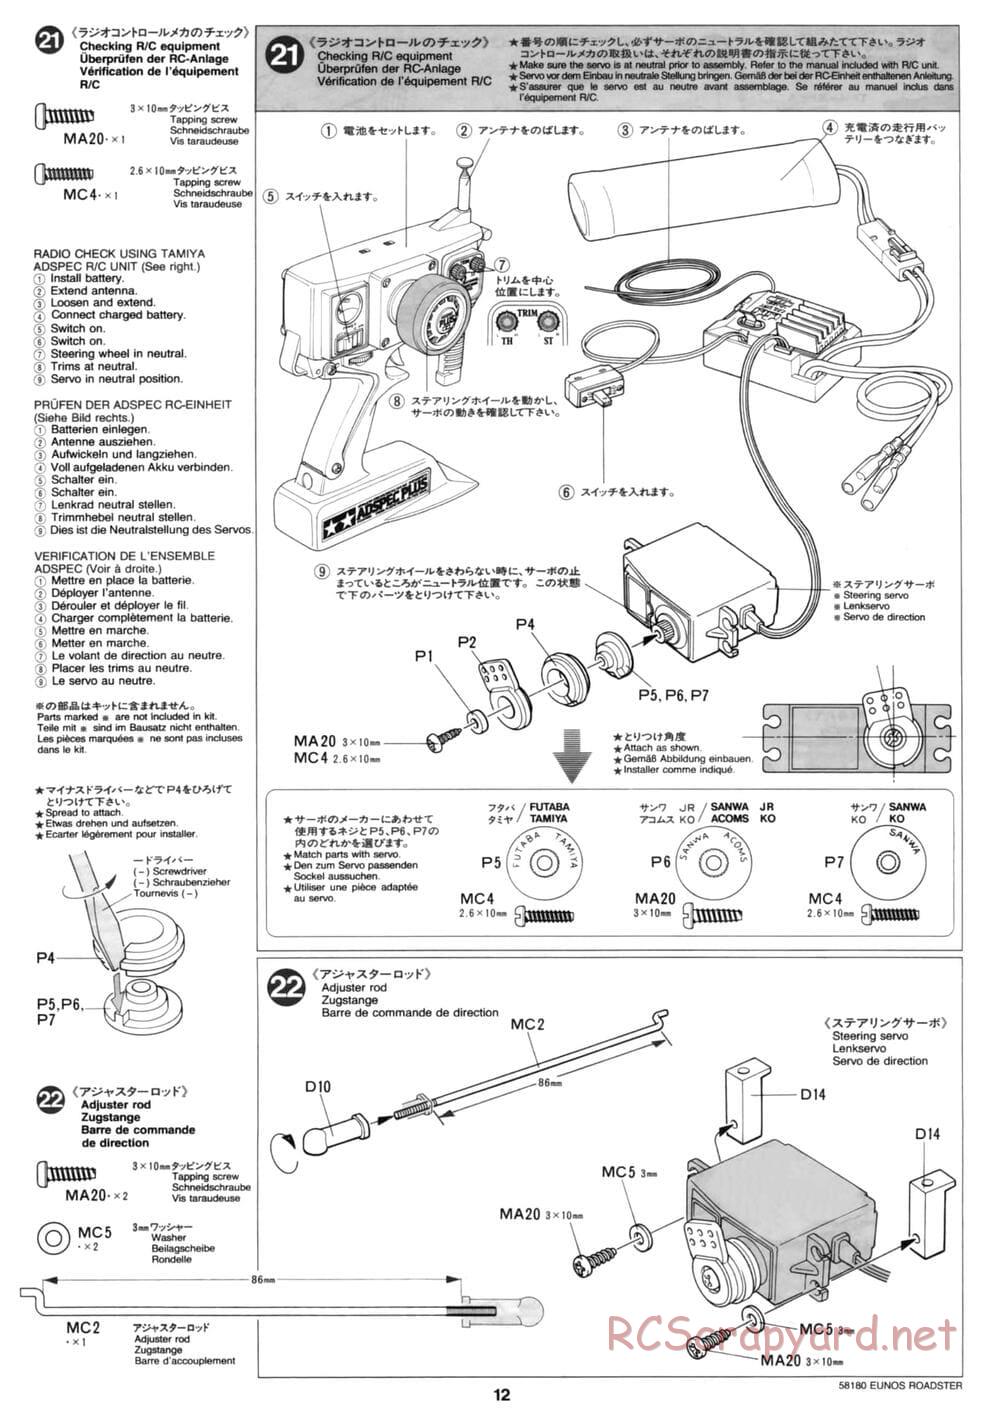 Tamiya - Eunos Roadster - M02M Chassis - Manual - Page 12